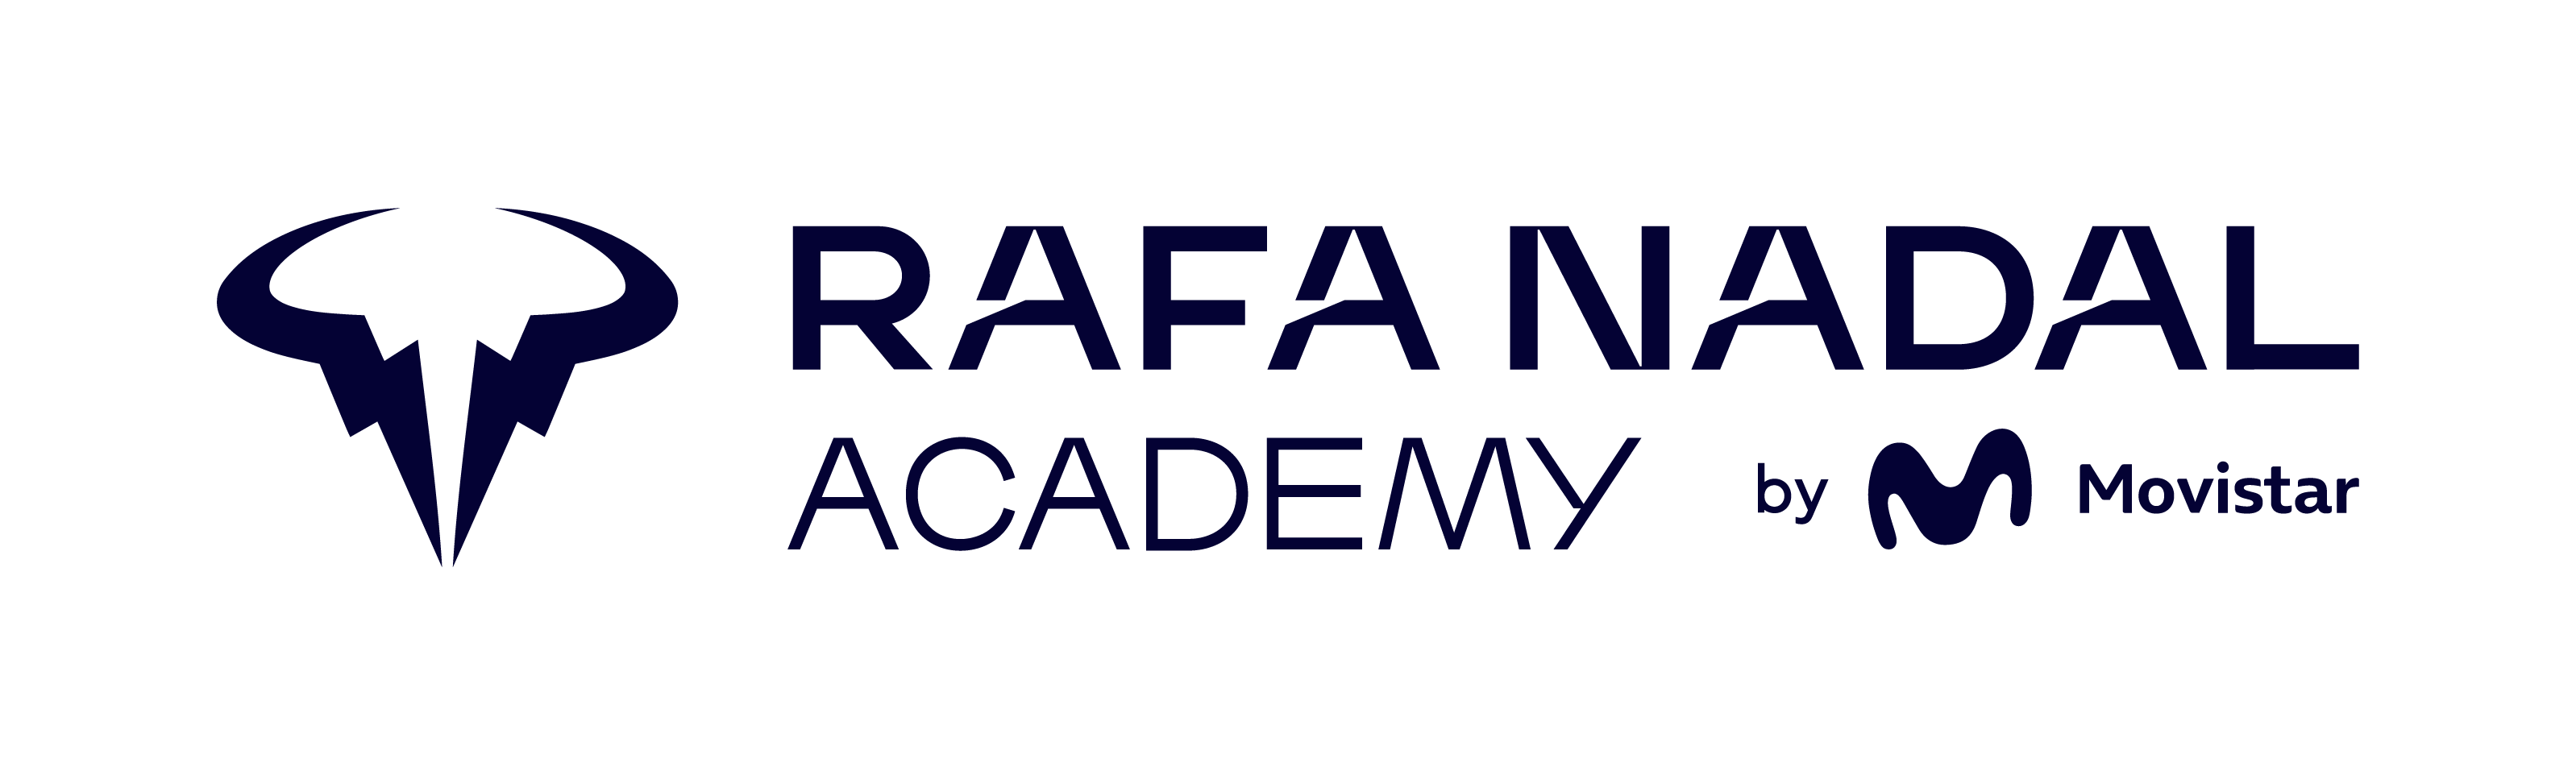 rafael nadal academy shop online